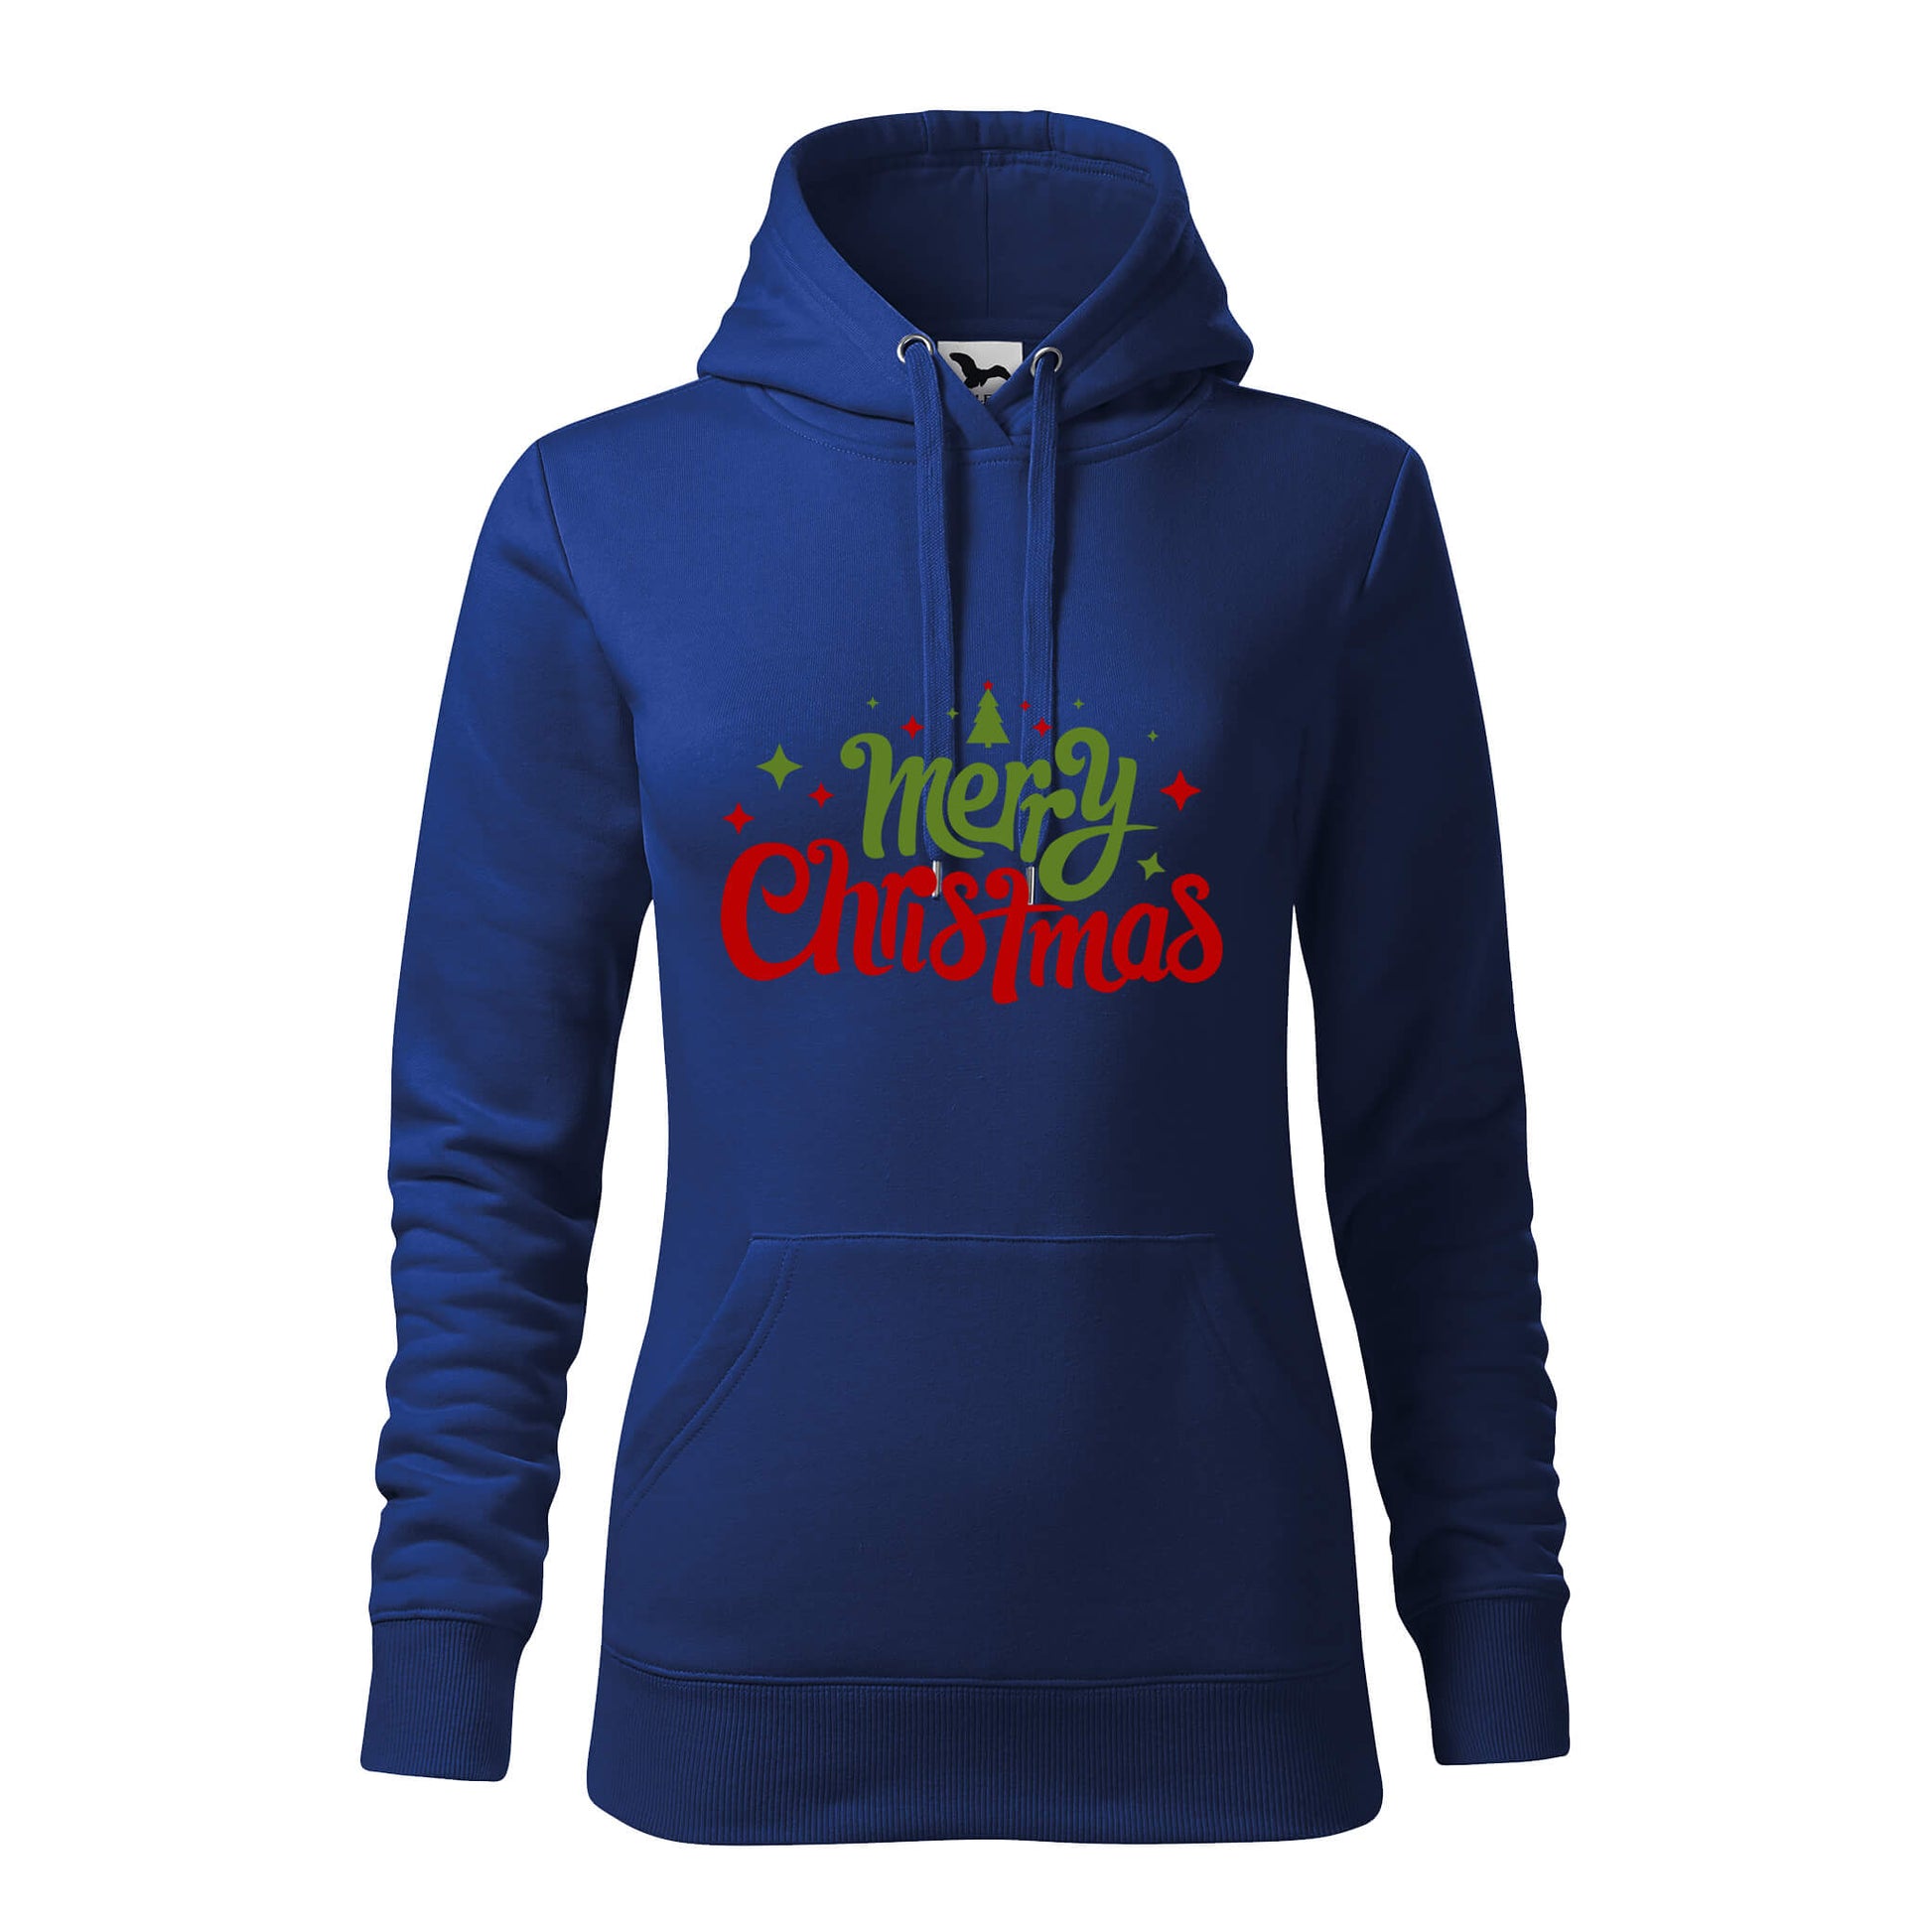 Merry christmas hoodie - rvdesignprint